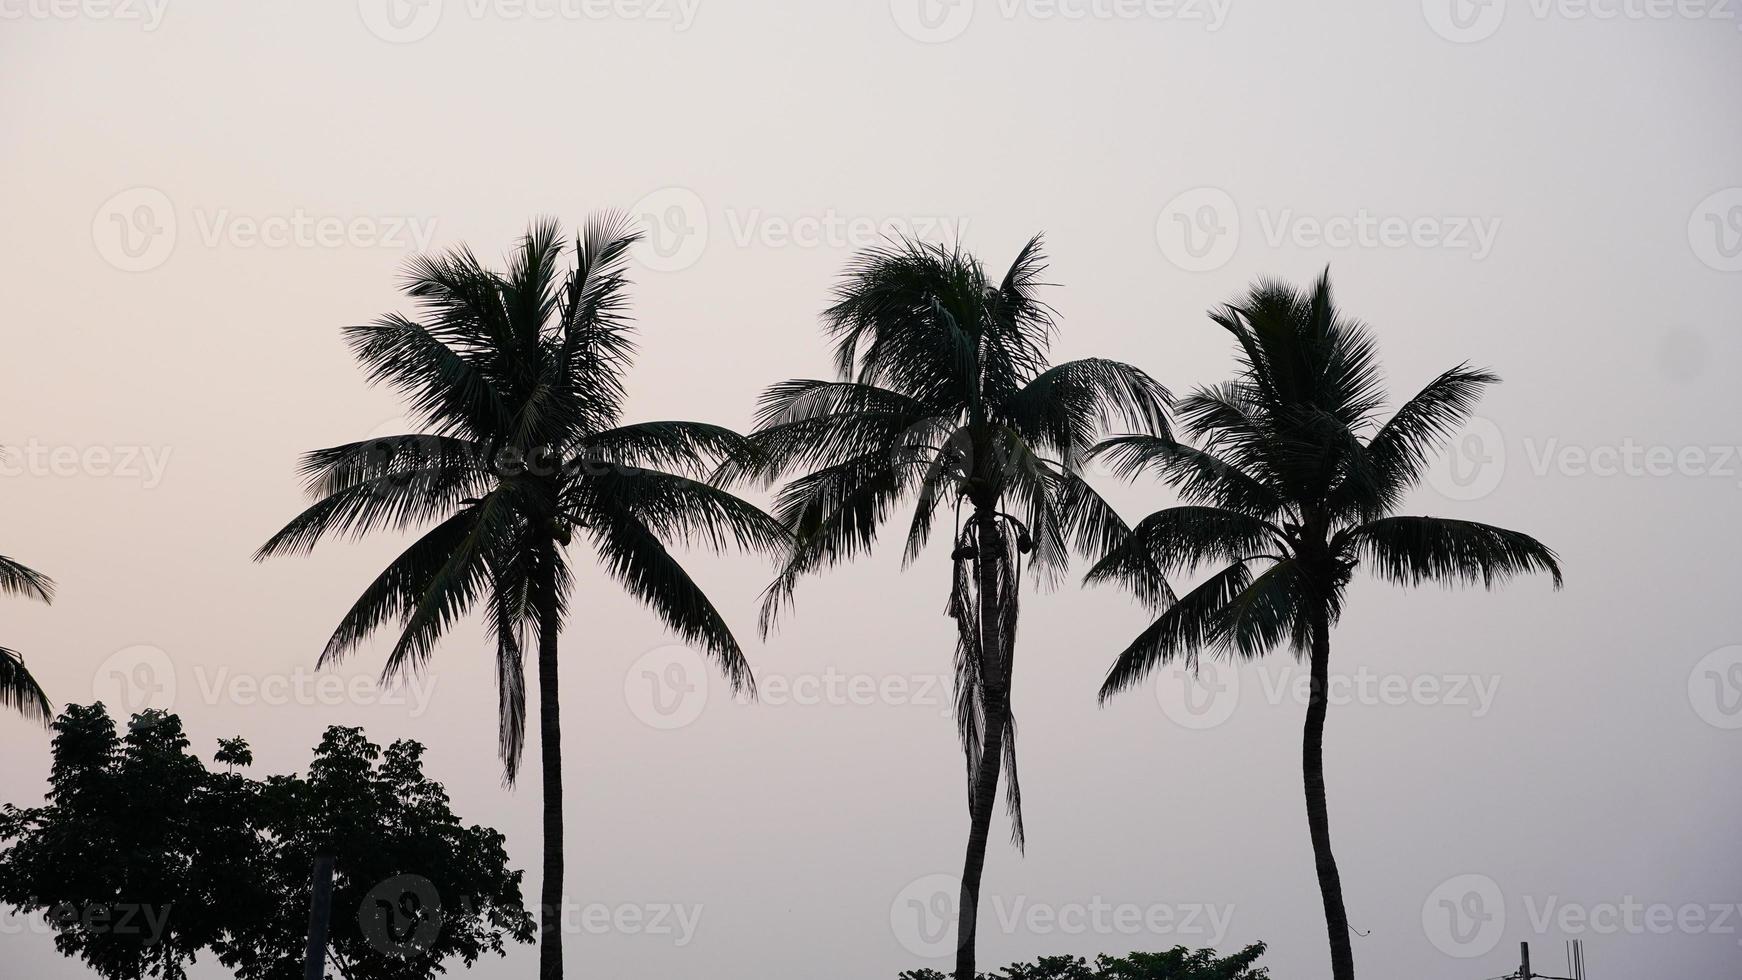 tree of coconut image hd photo